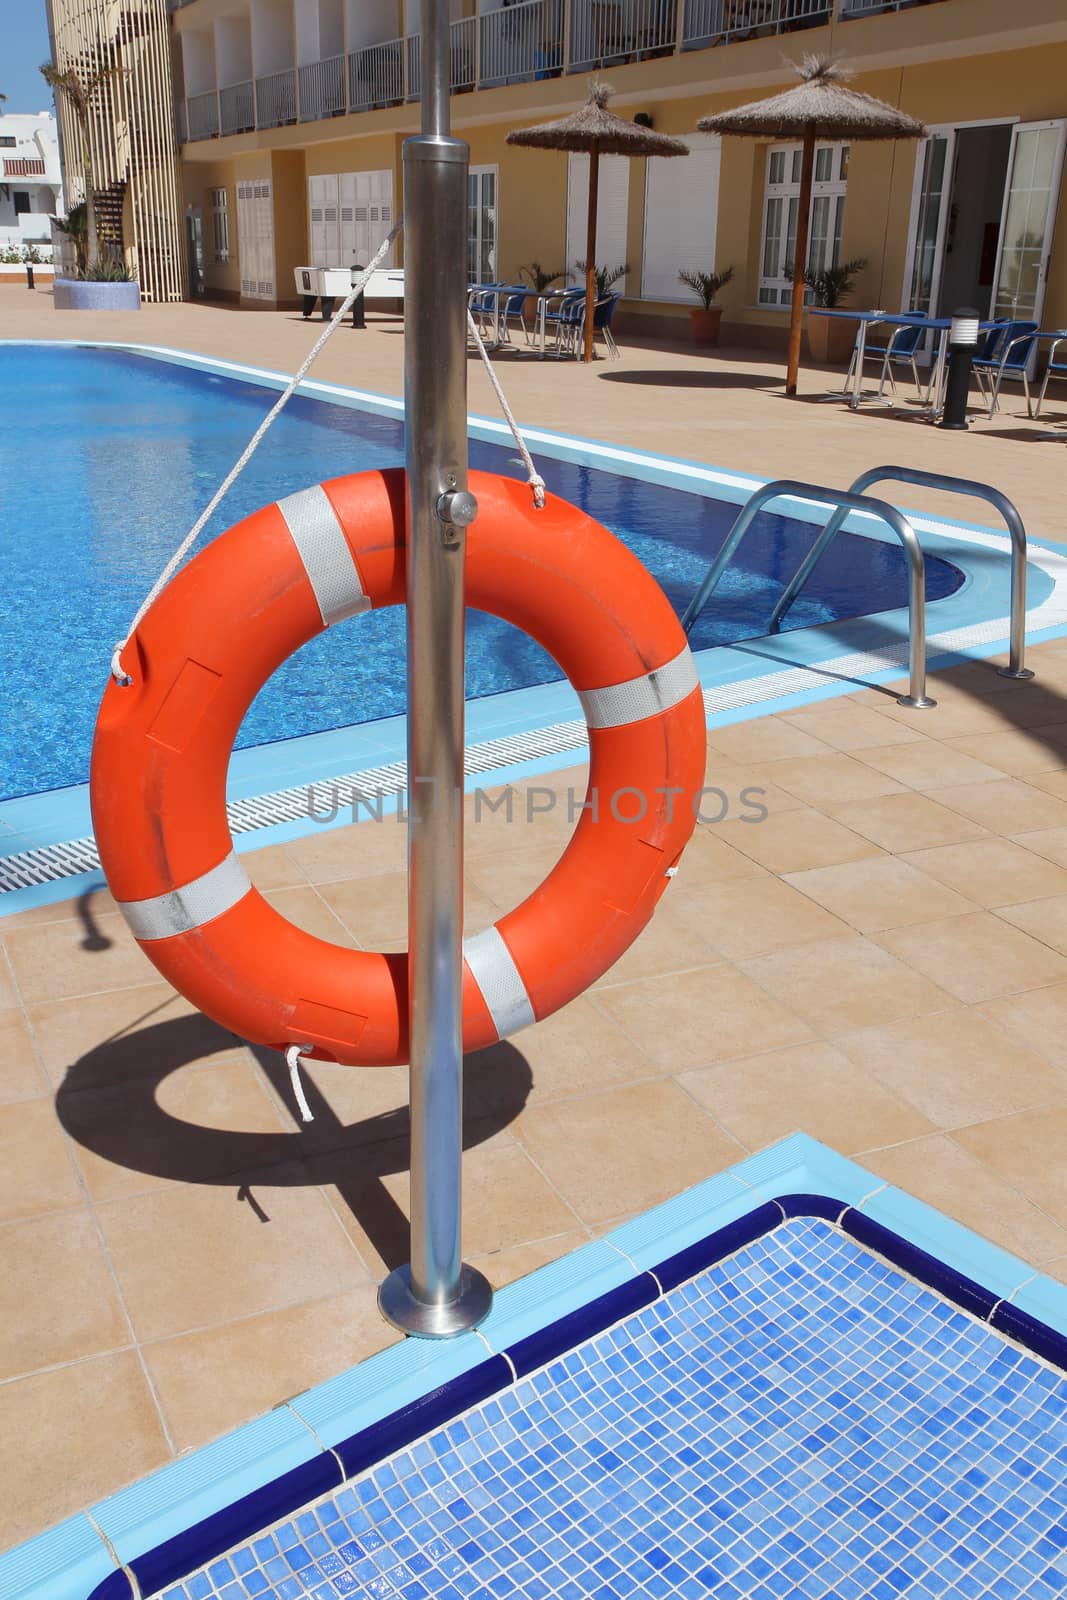 Orange lifebuoy or lifebelt hanging next to the swimming pool of a hotel.